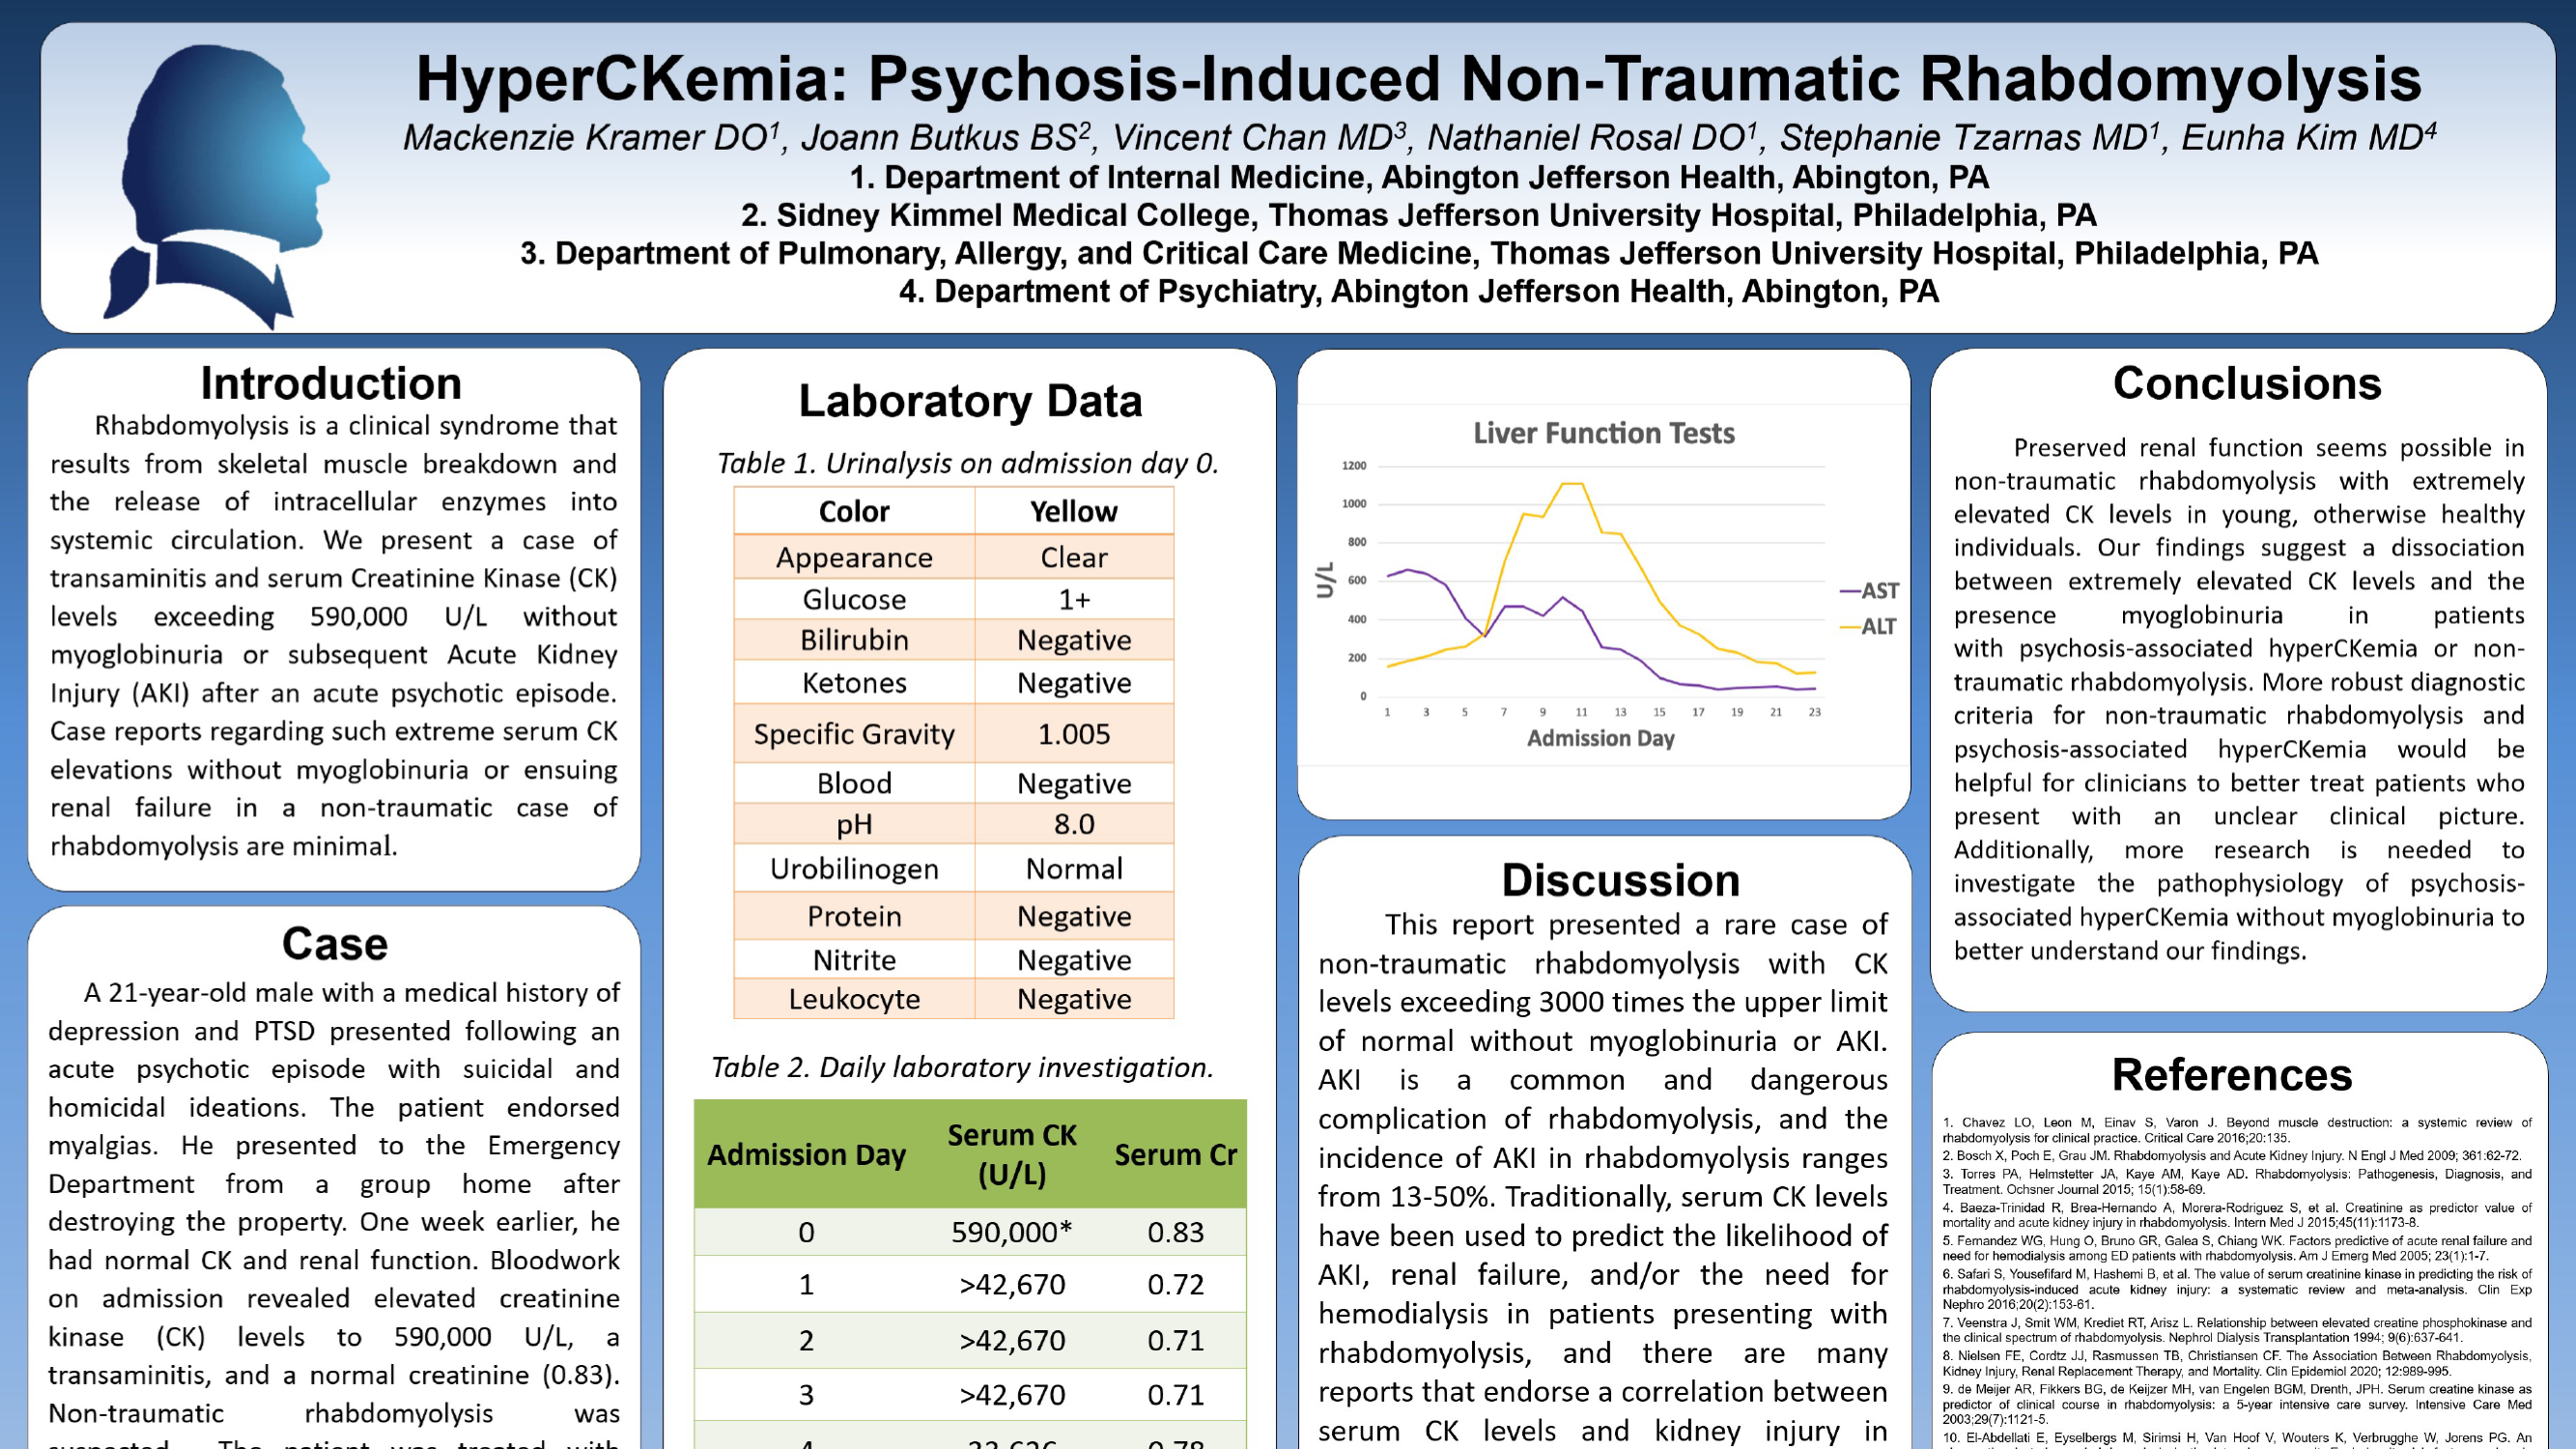 Mackenzie Kramer - PAS-48-HyperCKemia-Psychosis-Induced-Non-Traumatic-Rhabdomyolysis